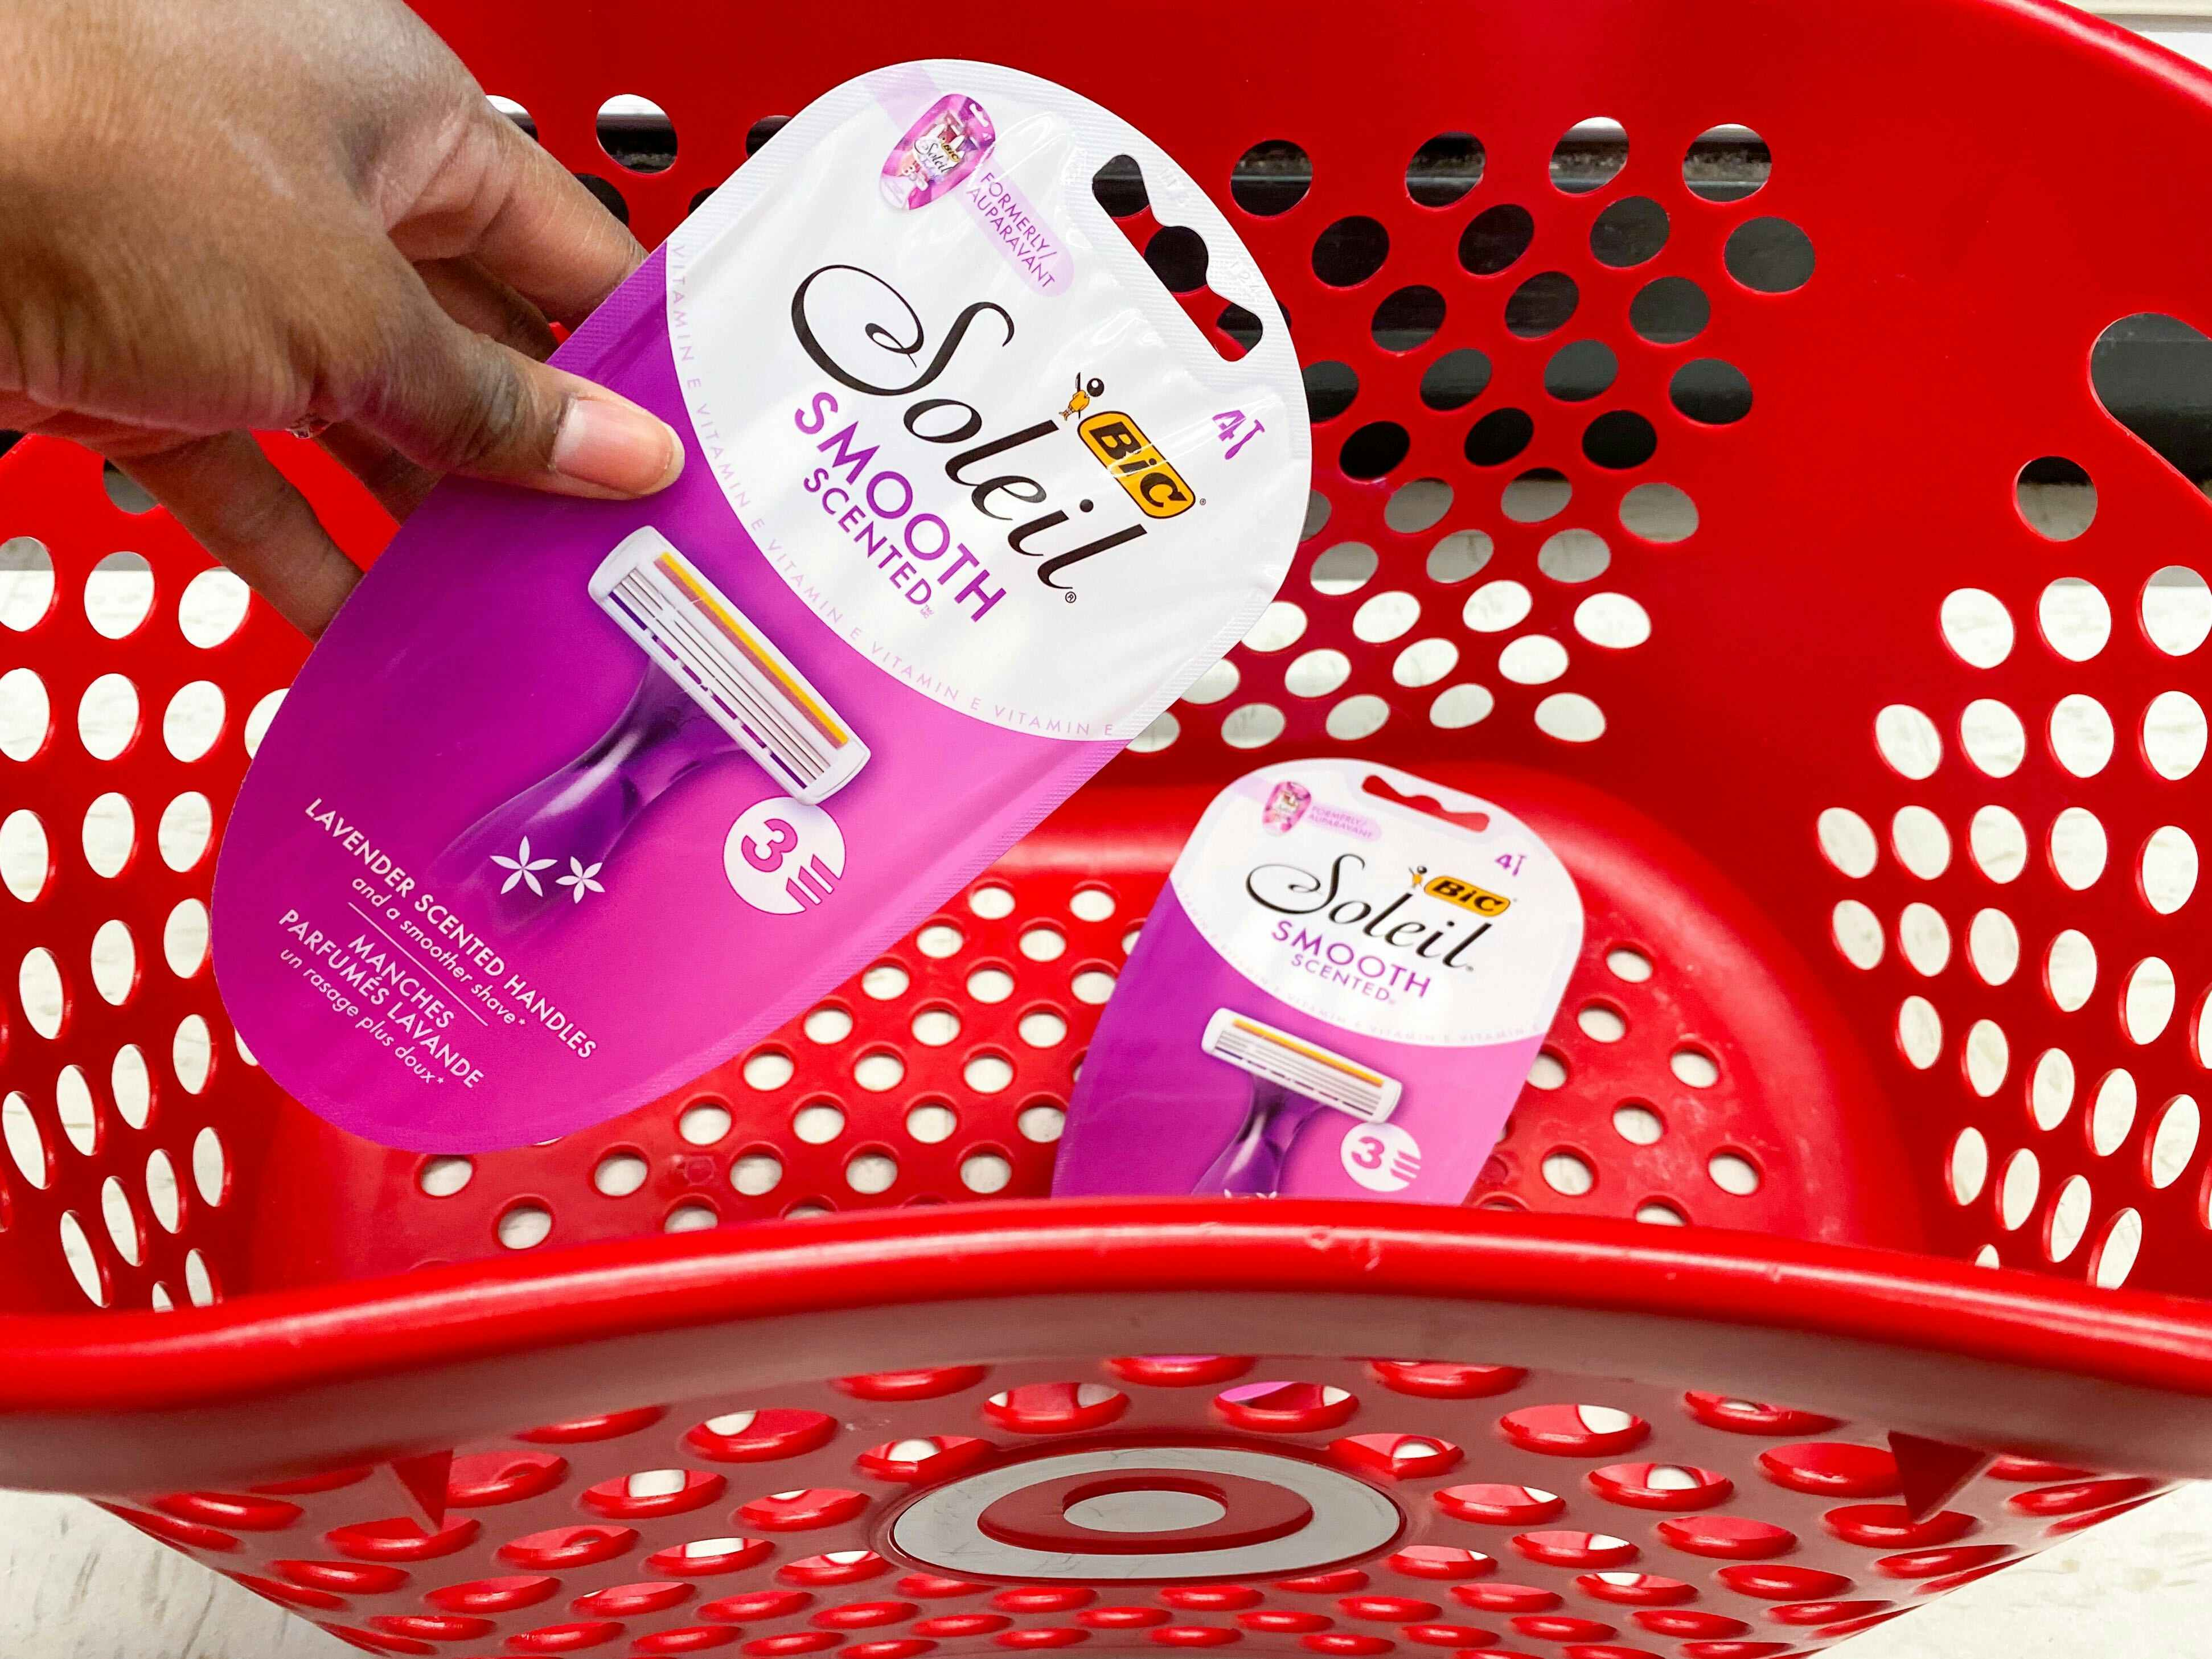 bic soleil disposable razors in a target basket